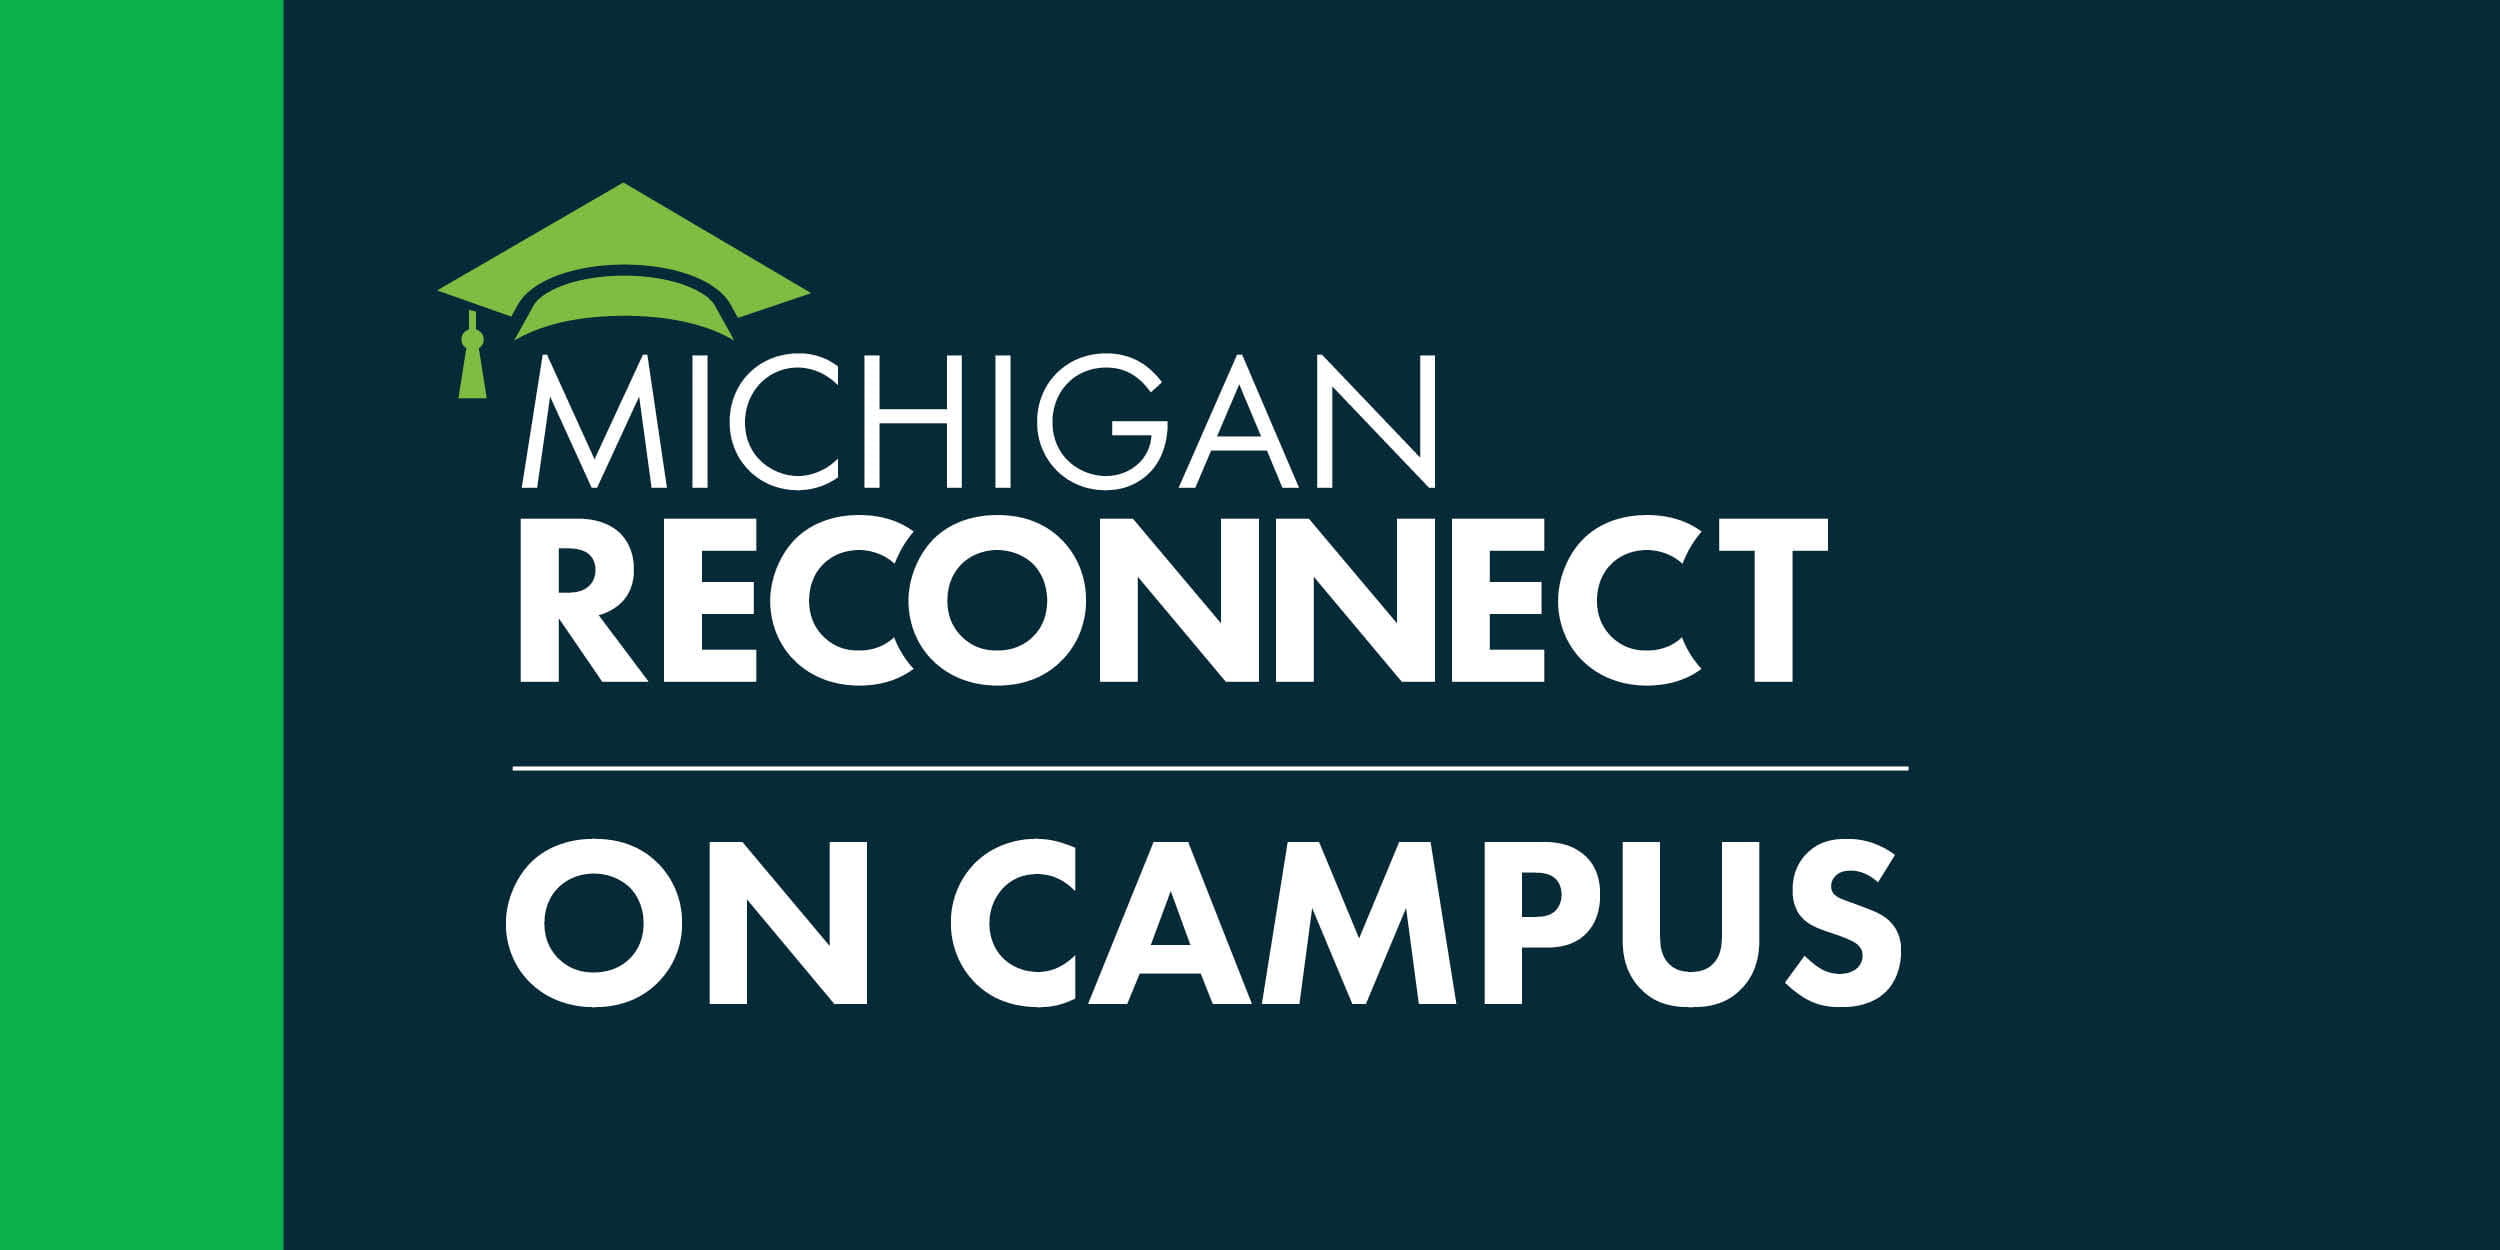 Header image - [Graduation cap icon over MI] Michigan Reconnect On Campus